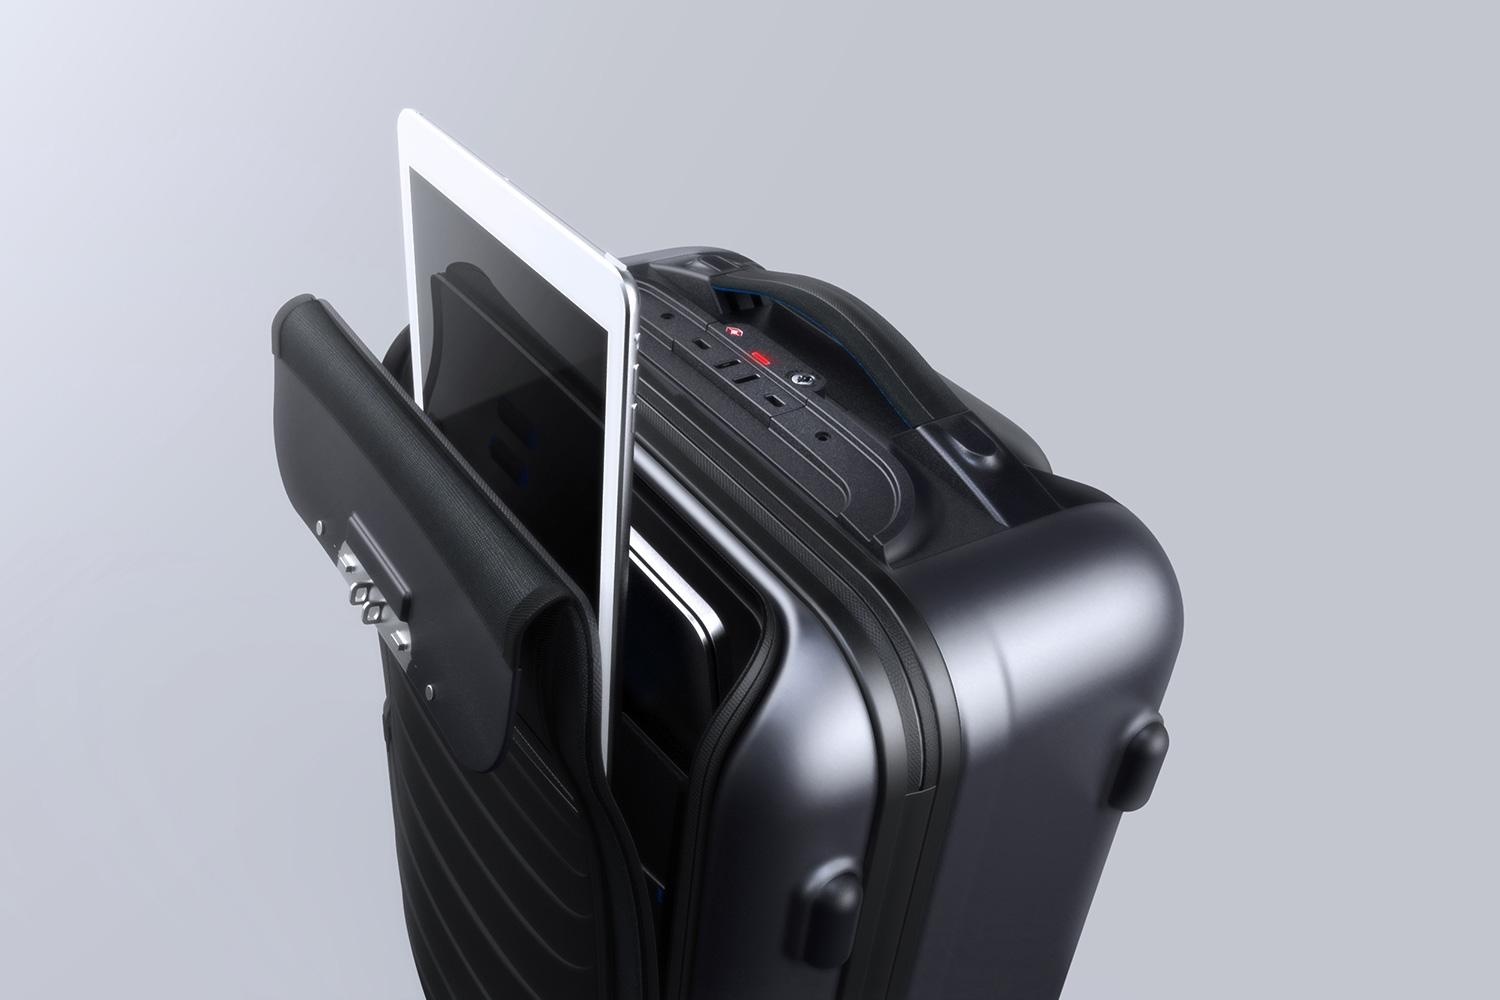 bluesmart-connected-suitcase-ipad-1500×1000